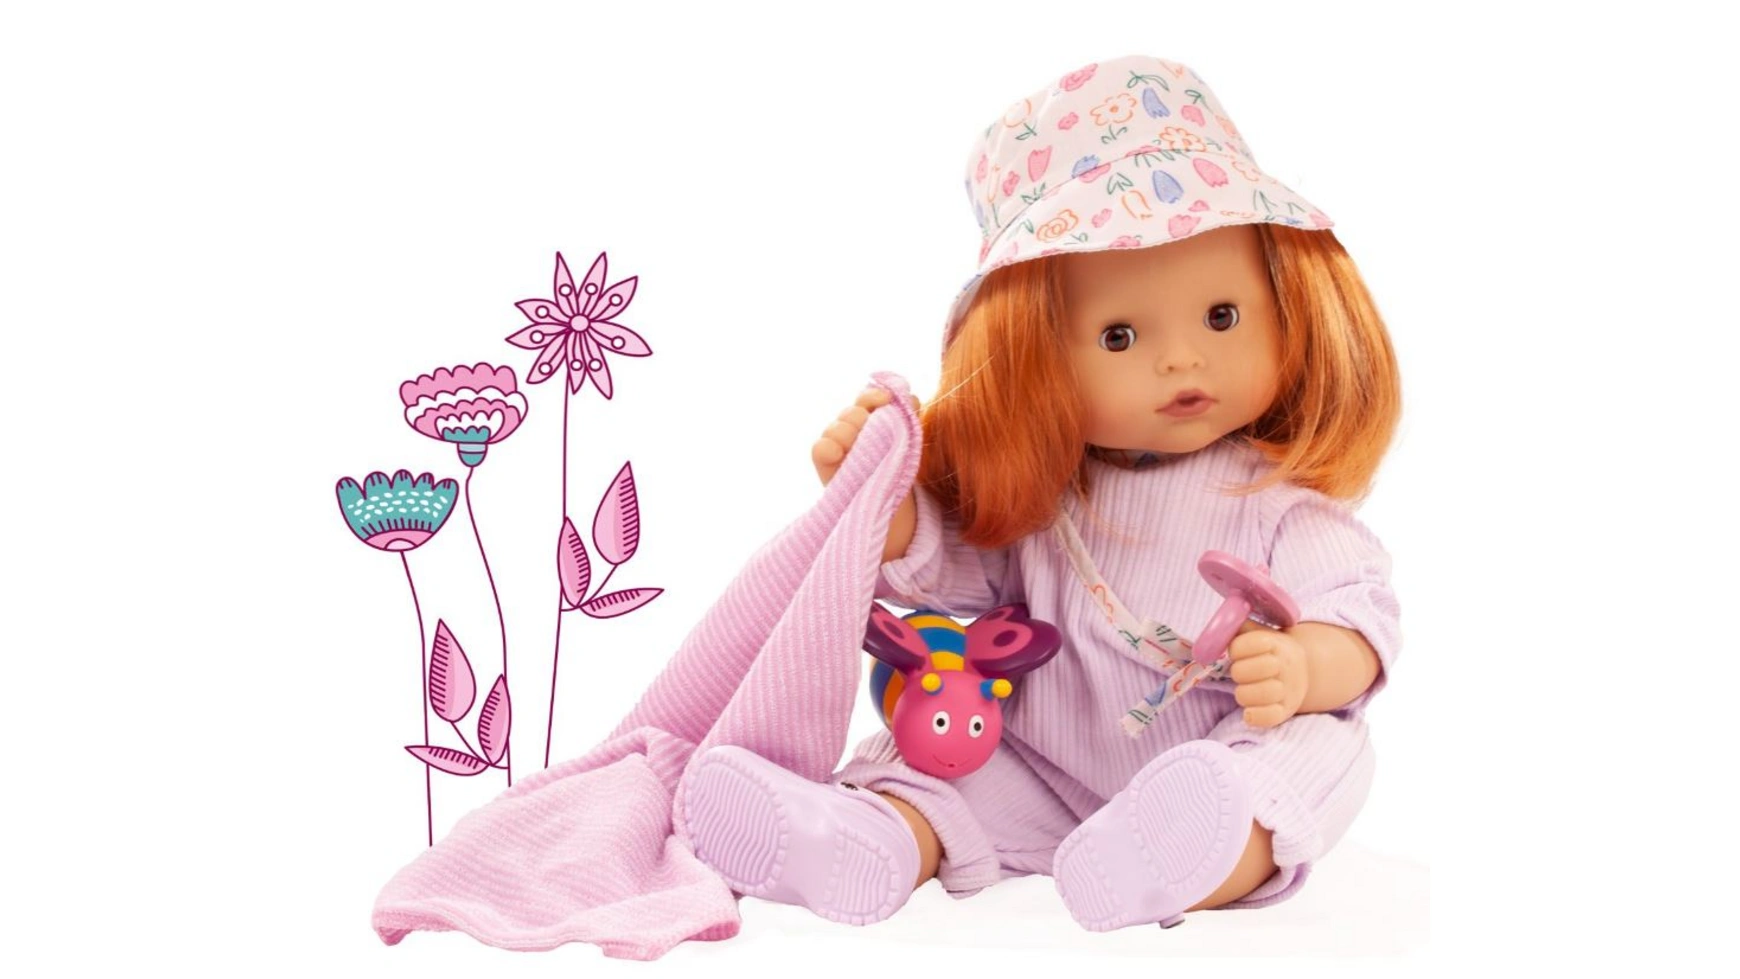 Maxy aquini bliblablume, кукла для ванны, 42 см Götz Puppenmanufaktur аквини девочка